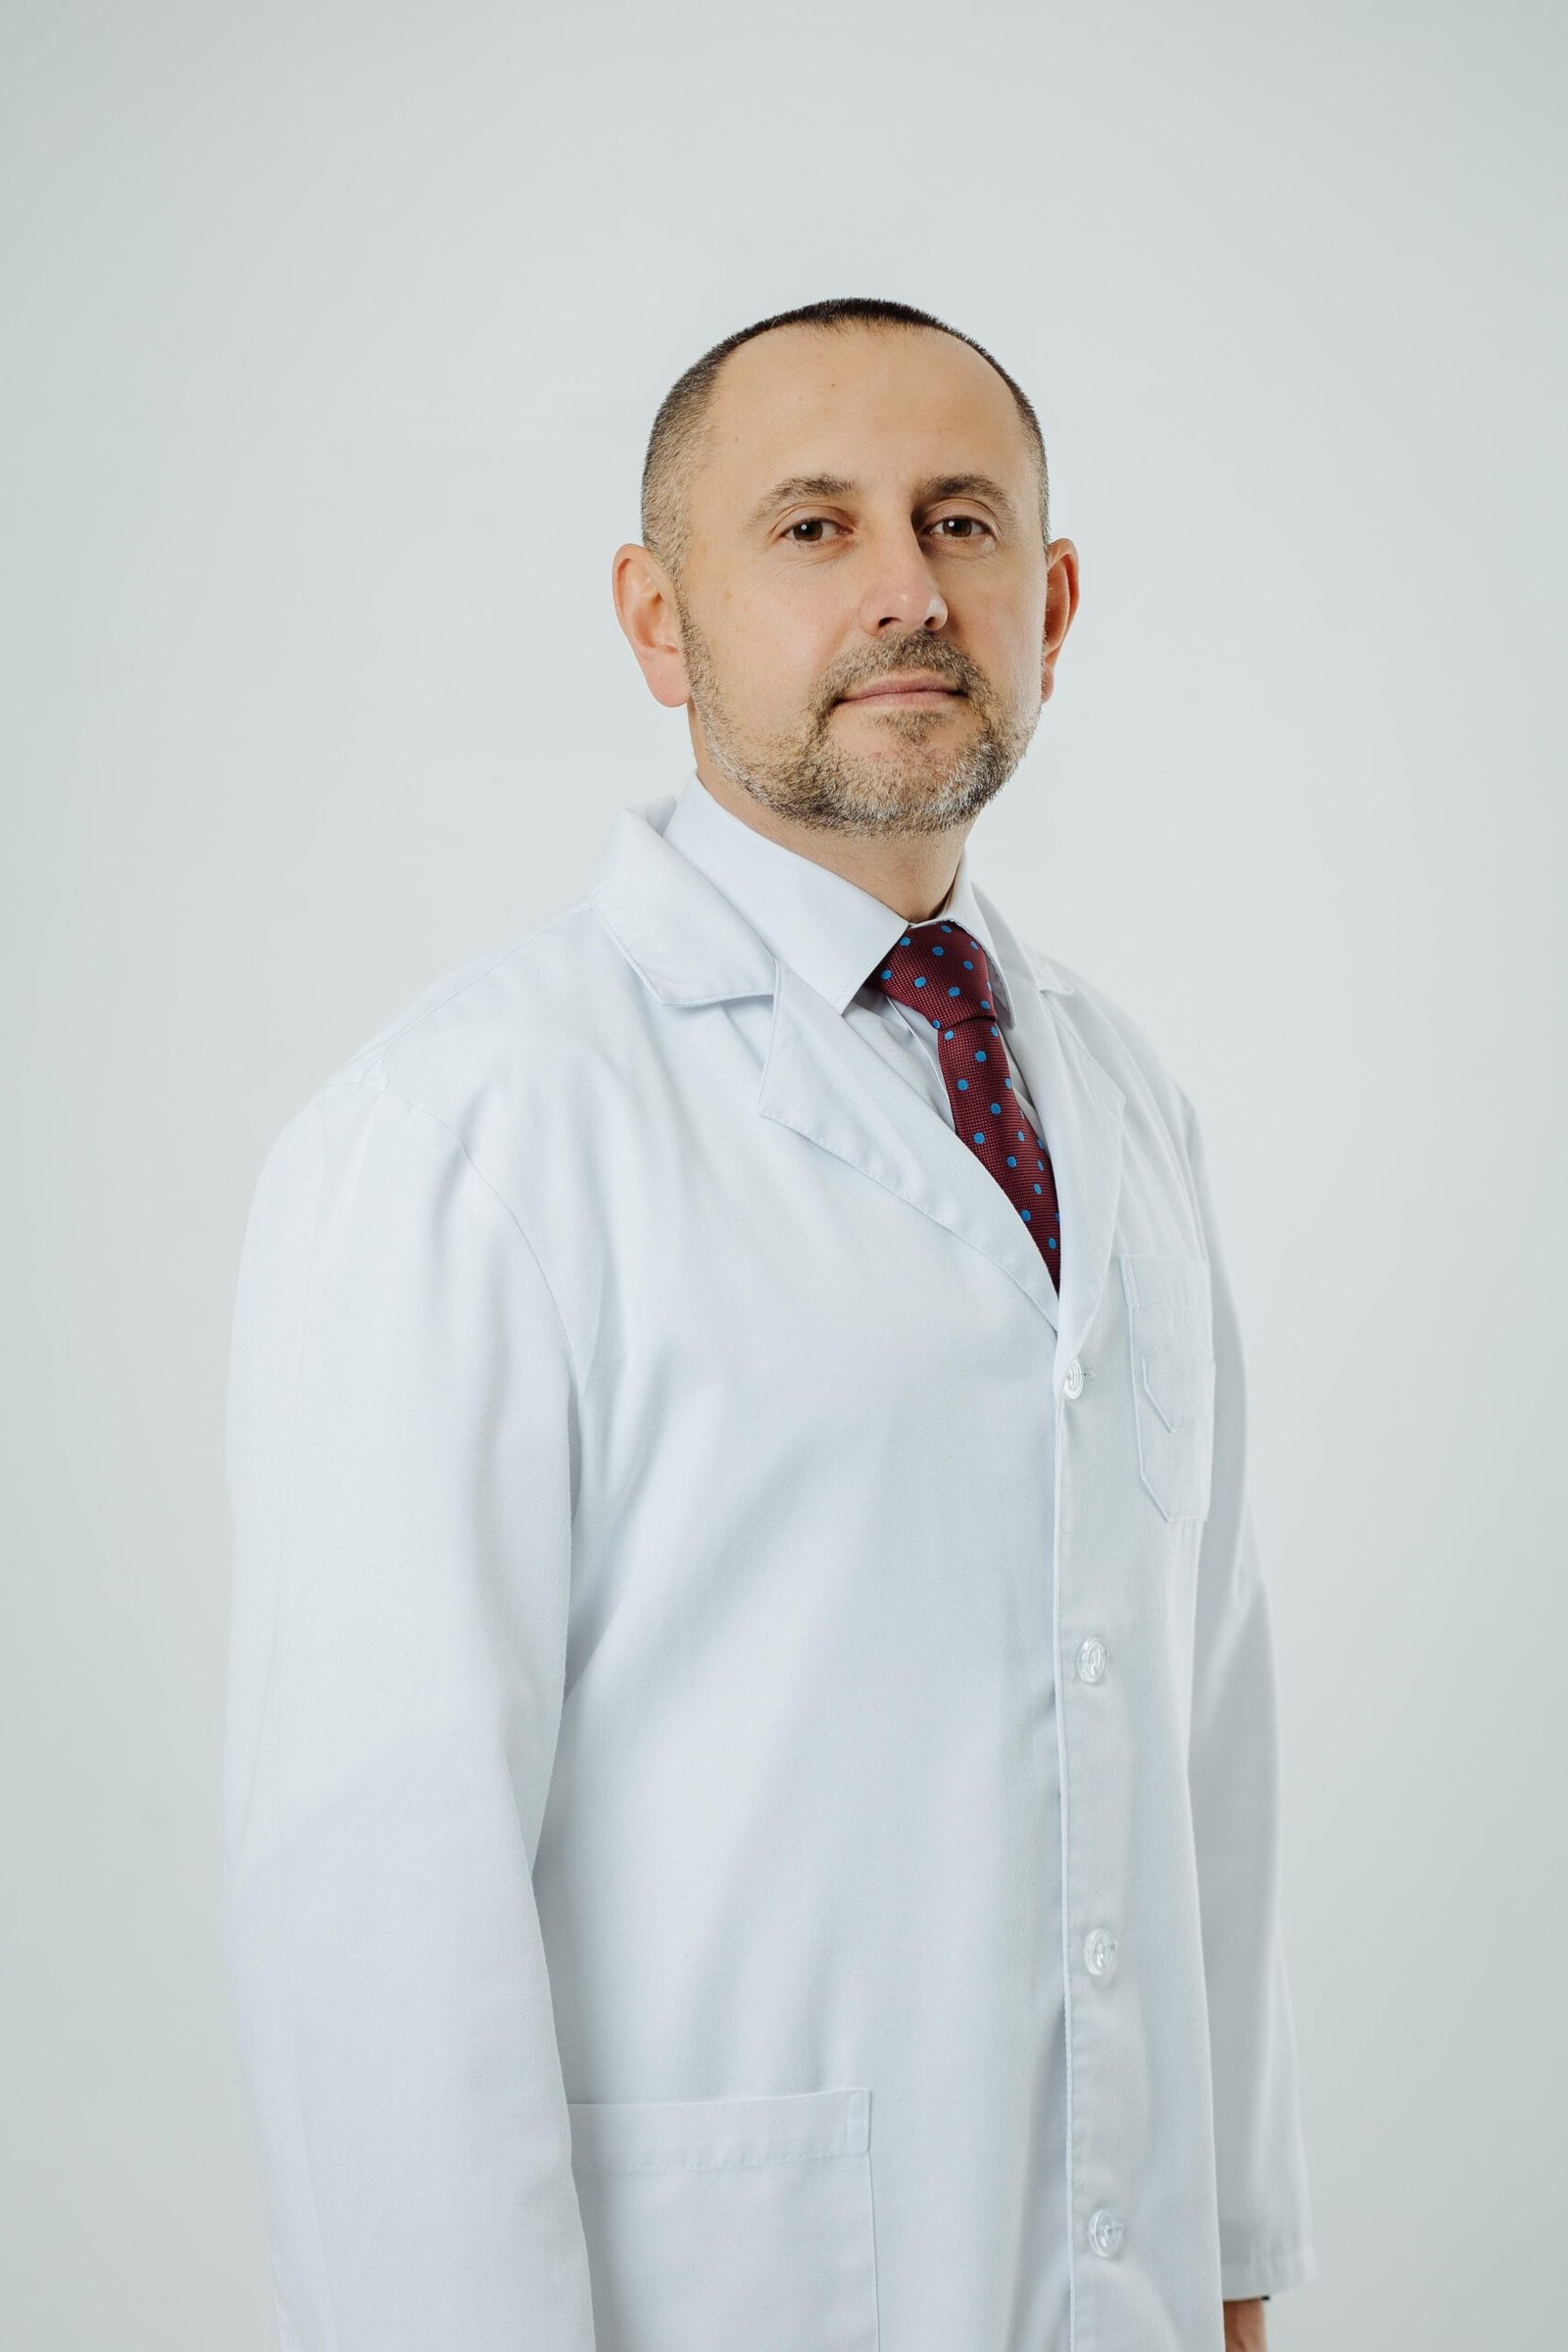 Buchok Oleksandr Oleksandrovych - Vitamin Medical Center